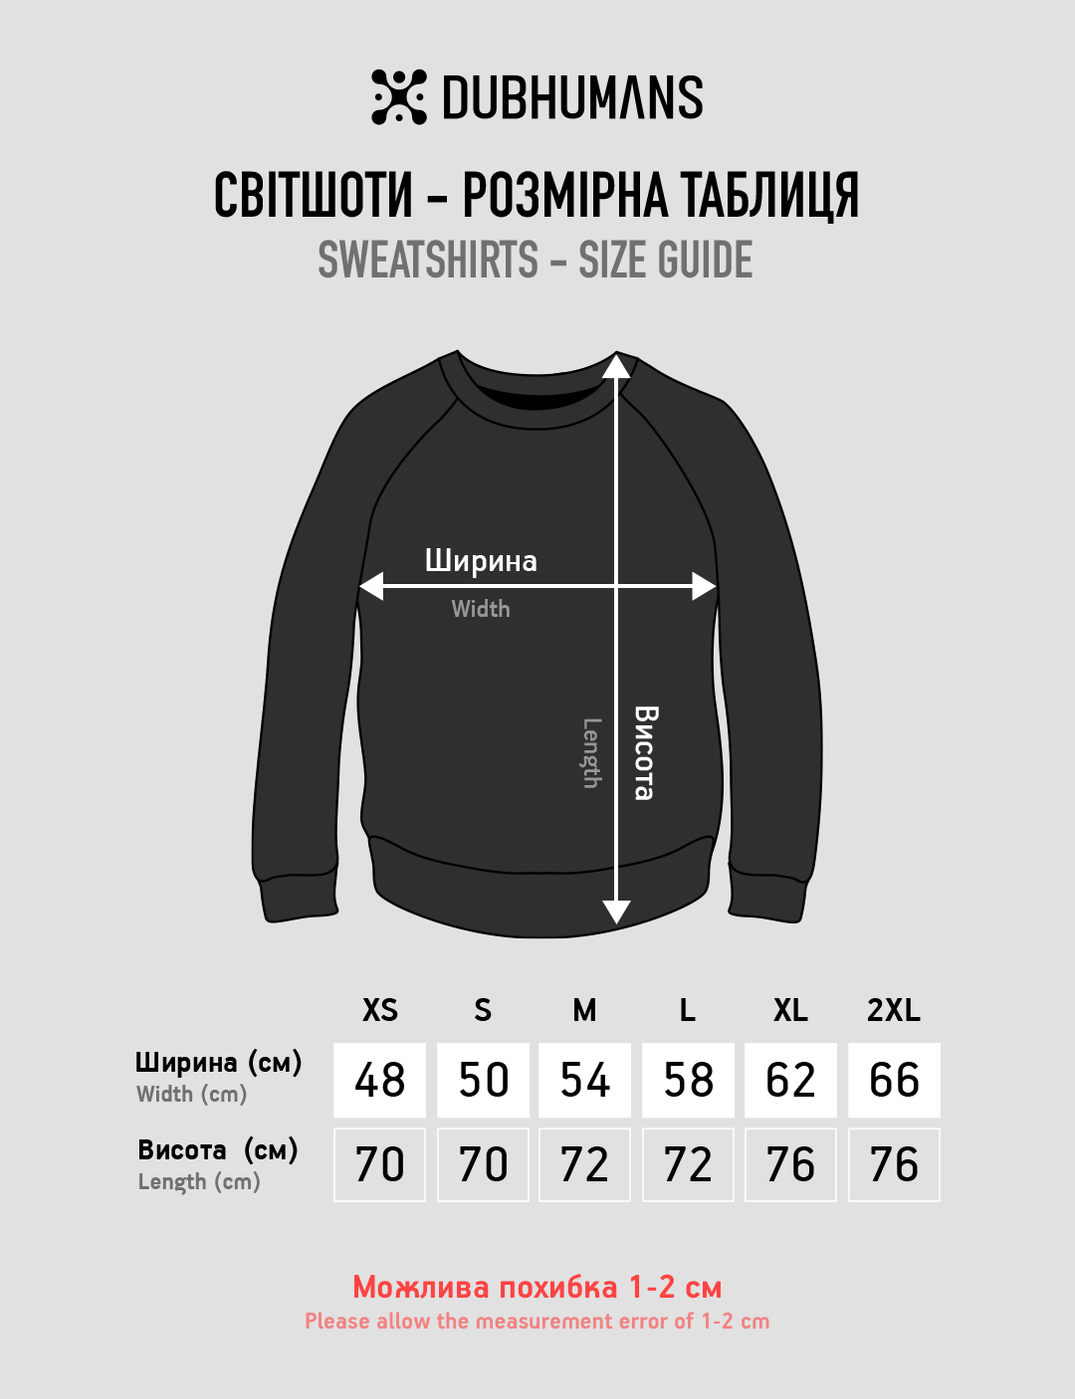 Men's Sweatshirt “Black Sea Underwater Lifestyle”, Black, M